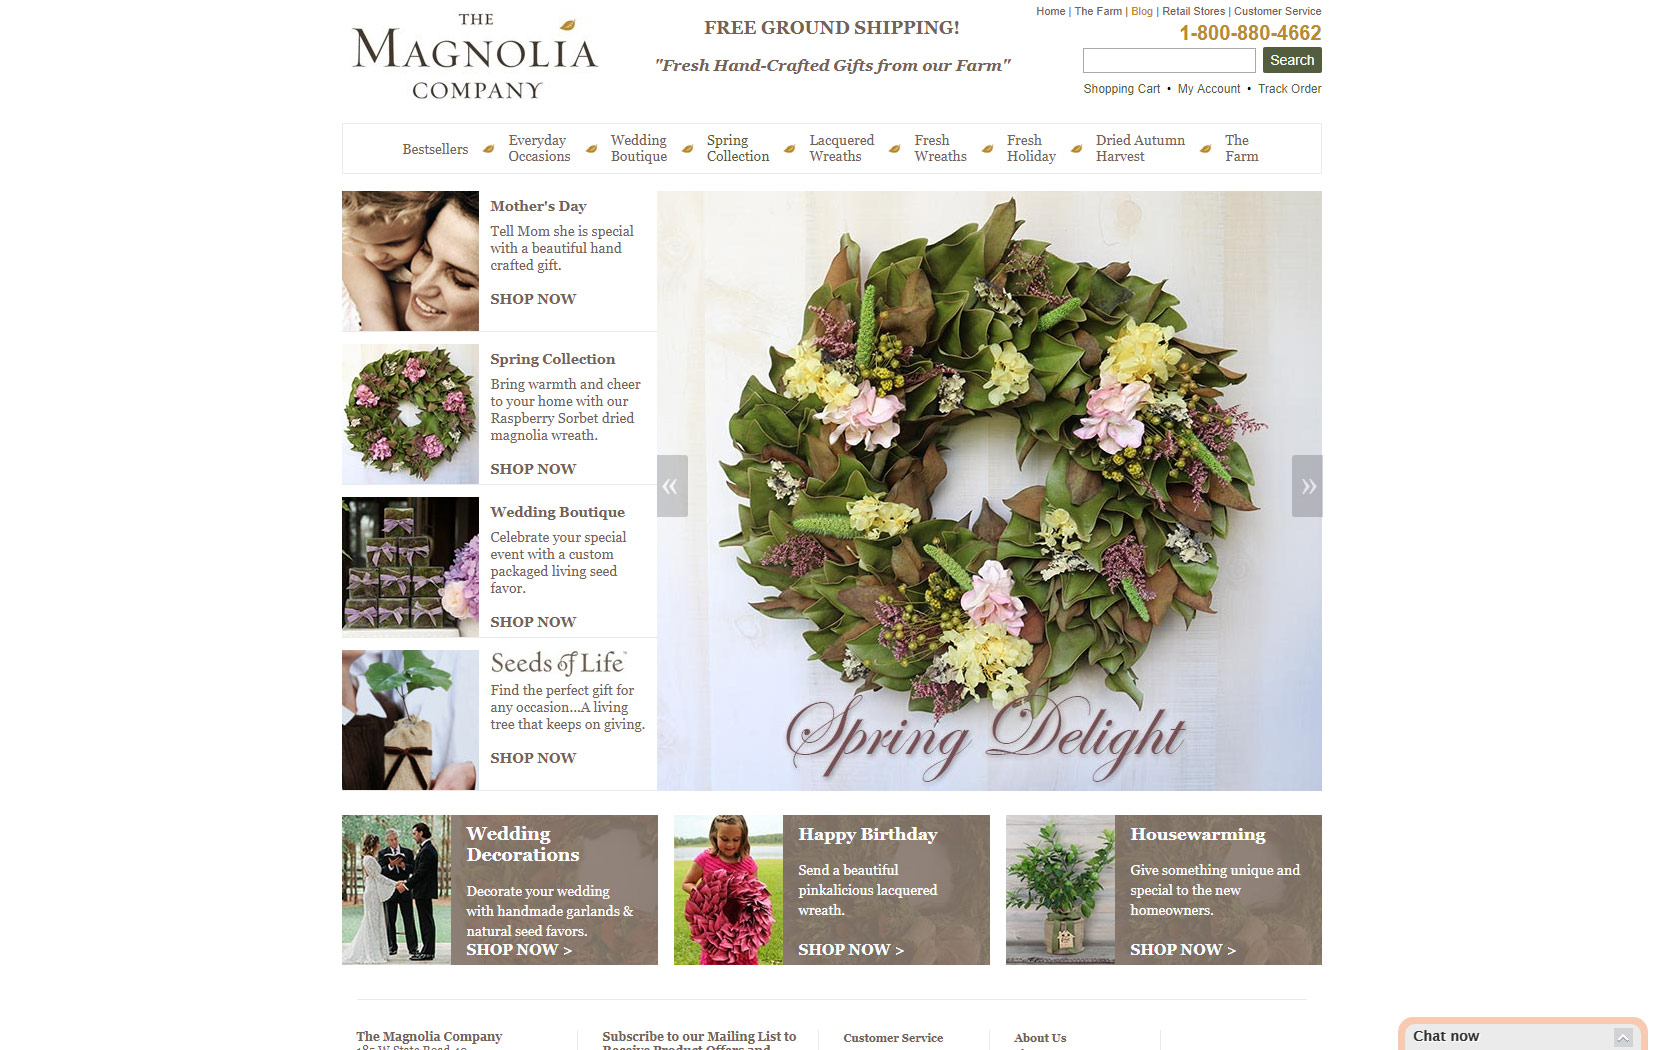 The Magnolia Company